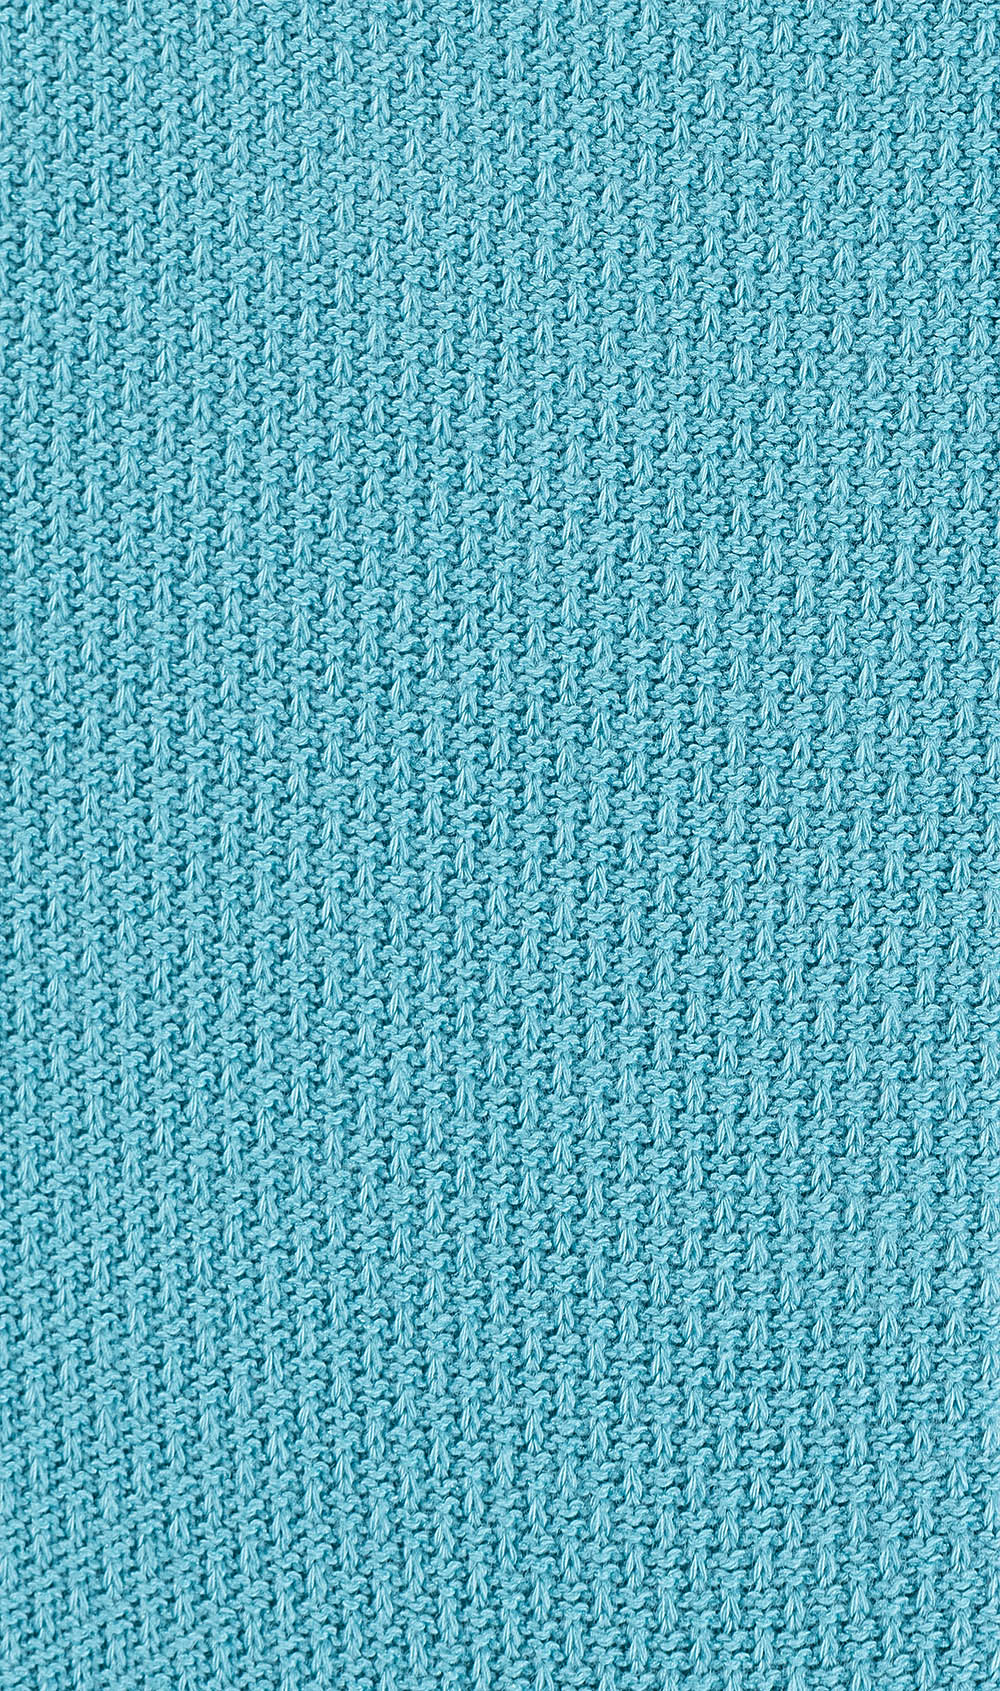 Mist Blue Textured Socks Pattern